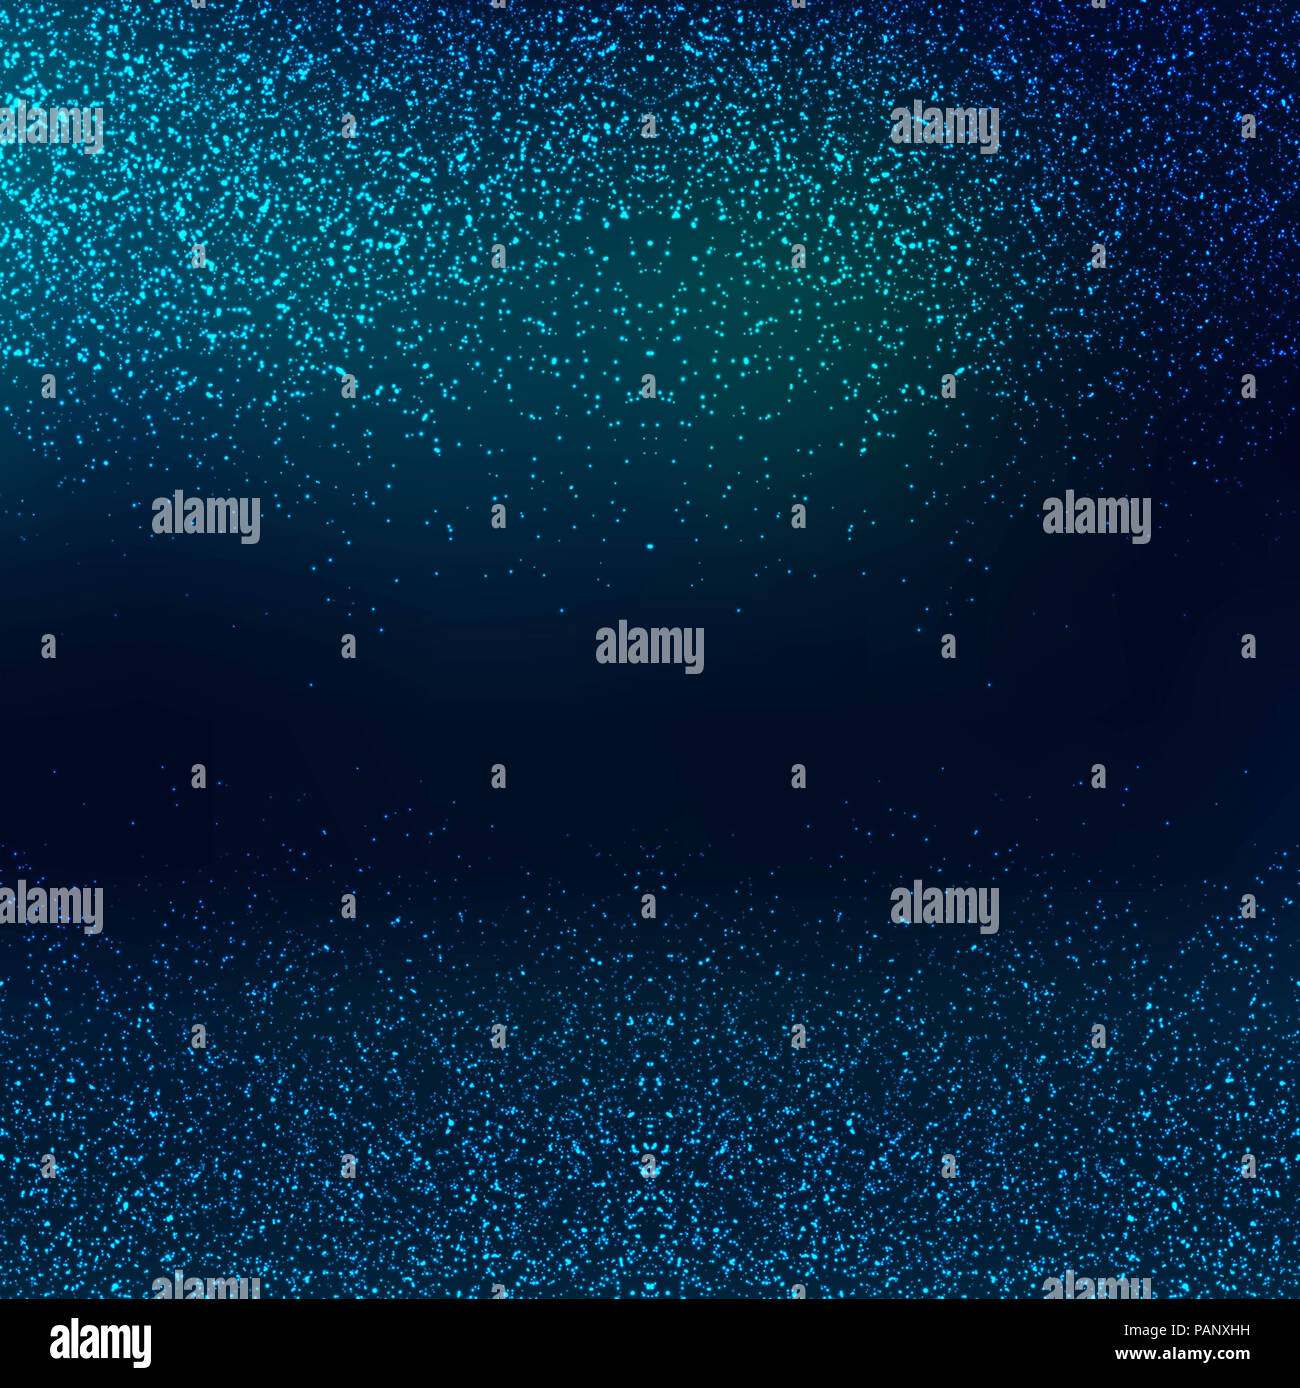 Abstract blue shiny glitter background Stock Photo - Alamy